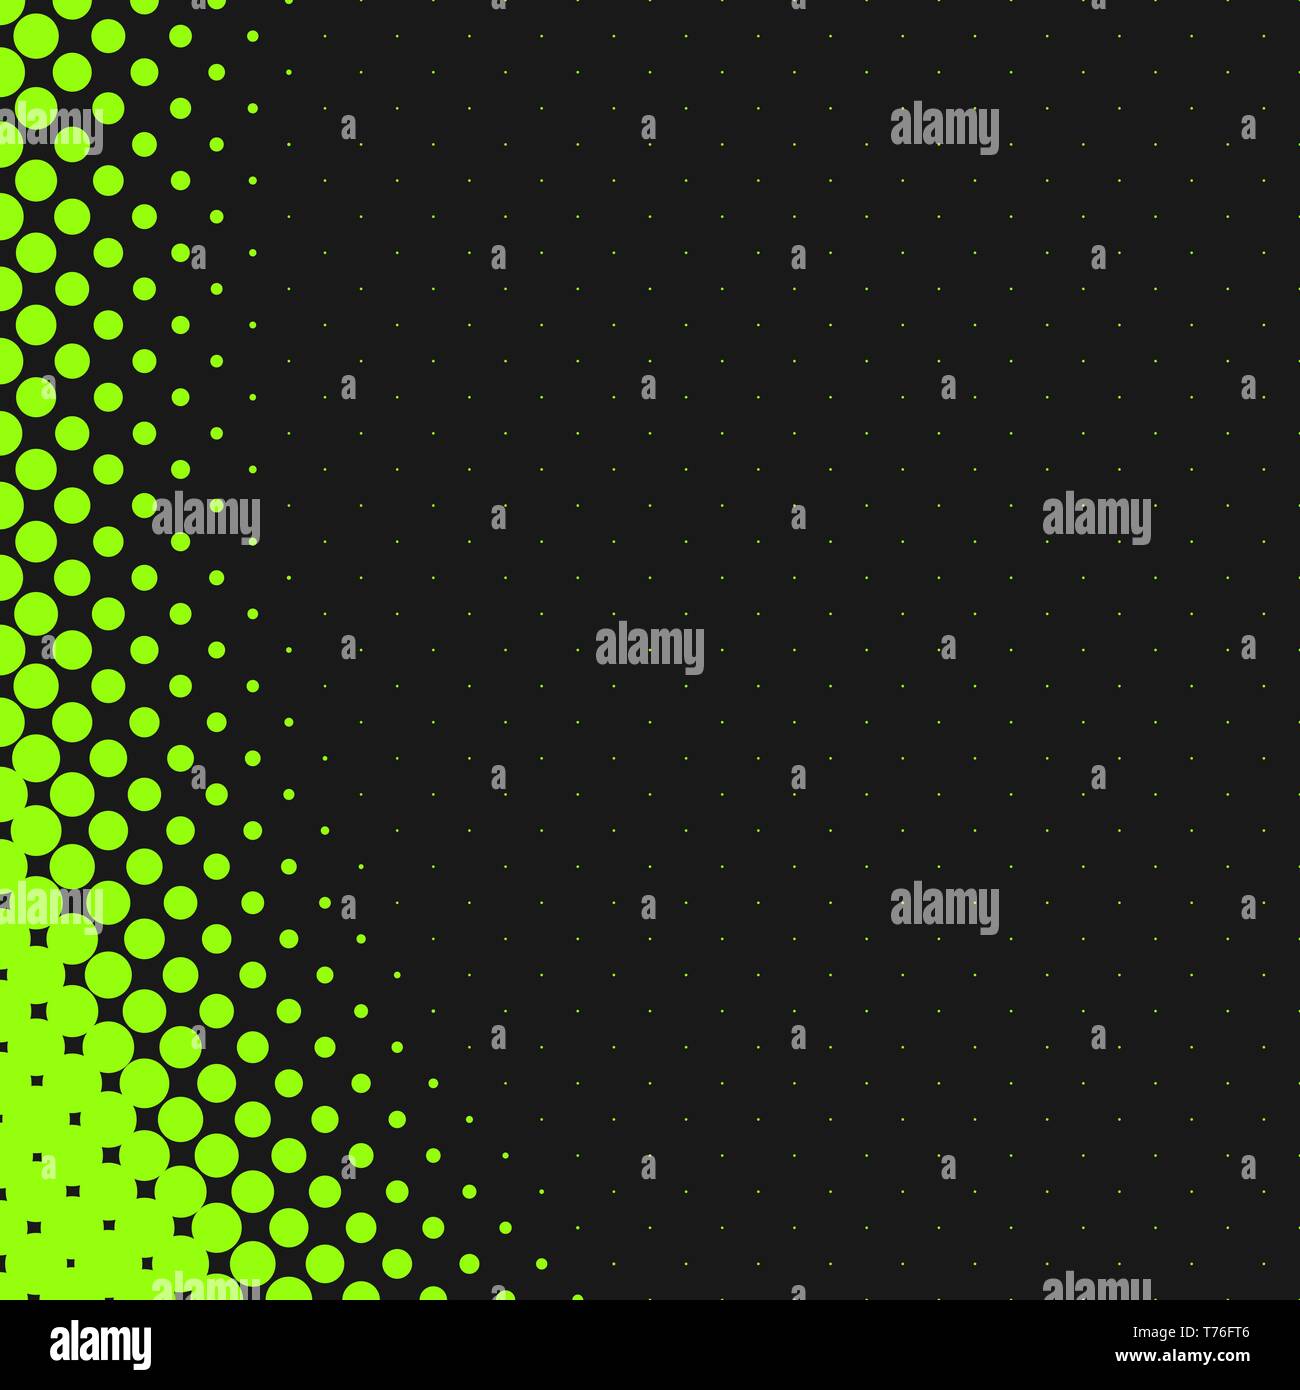 Green halftone dot pattern background template - vector illustration Stock Vector